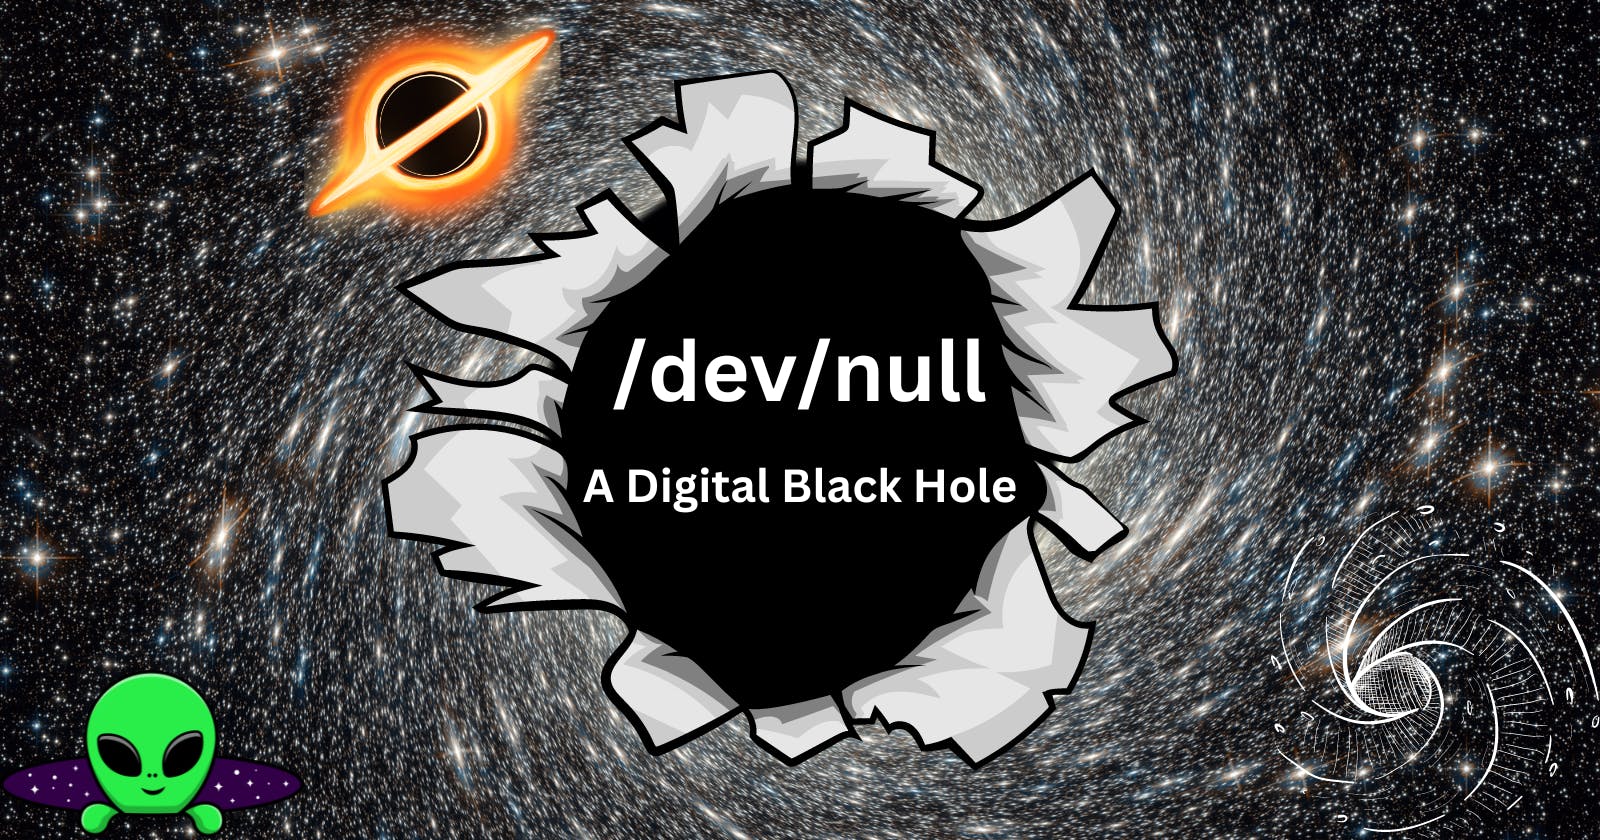 The Digital Black Hole /dev/null